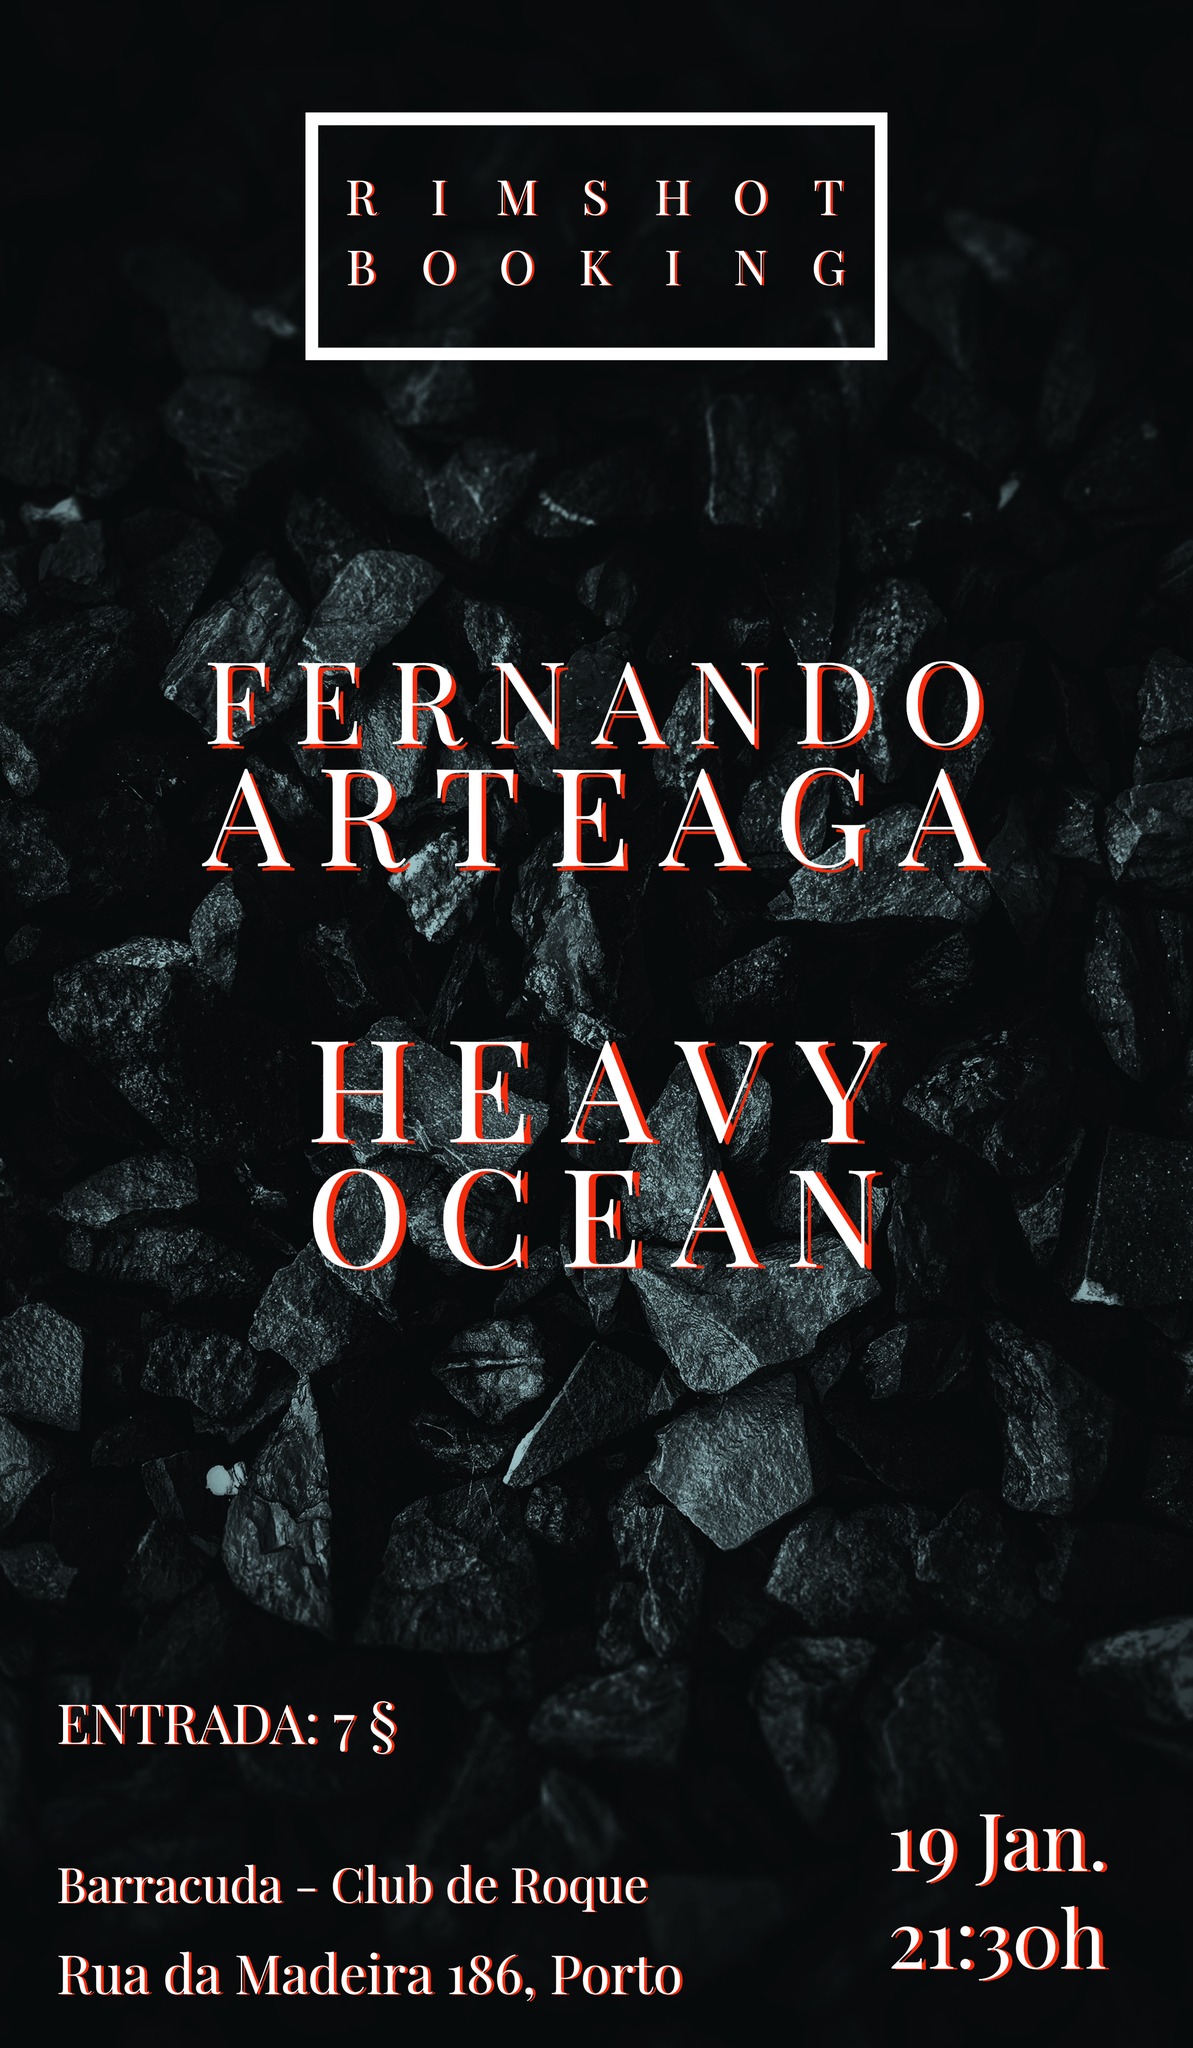 FERNANDO ARTEAGA + HEAVY OCEAN - BARRACUDA CLUBE DE ROQUE